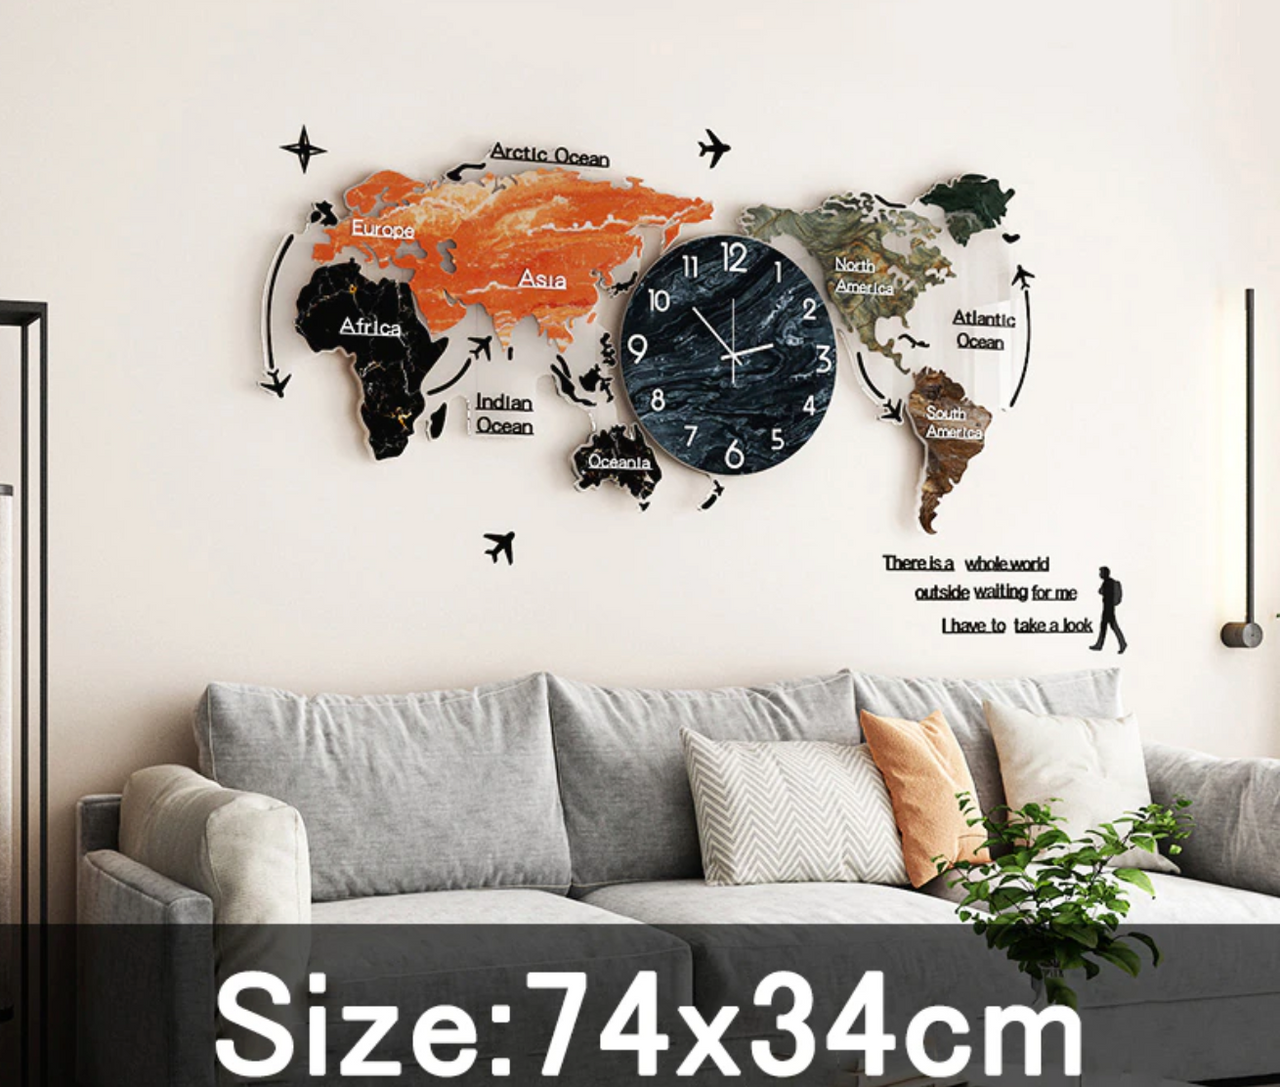 Colourful Acrylic & Decorative World Map Style Wall Clock